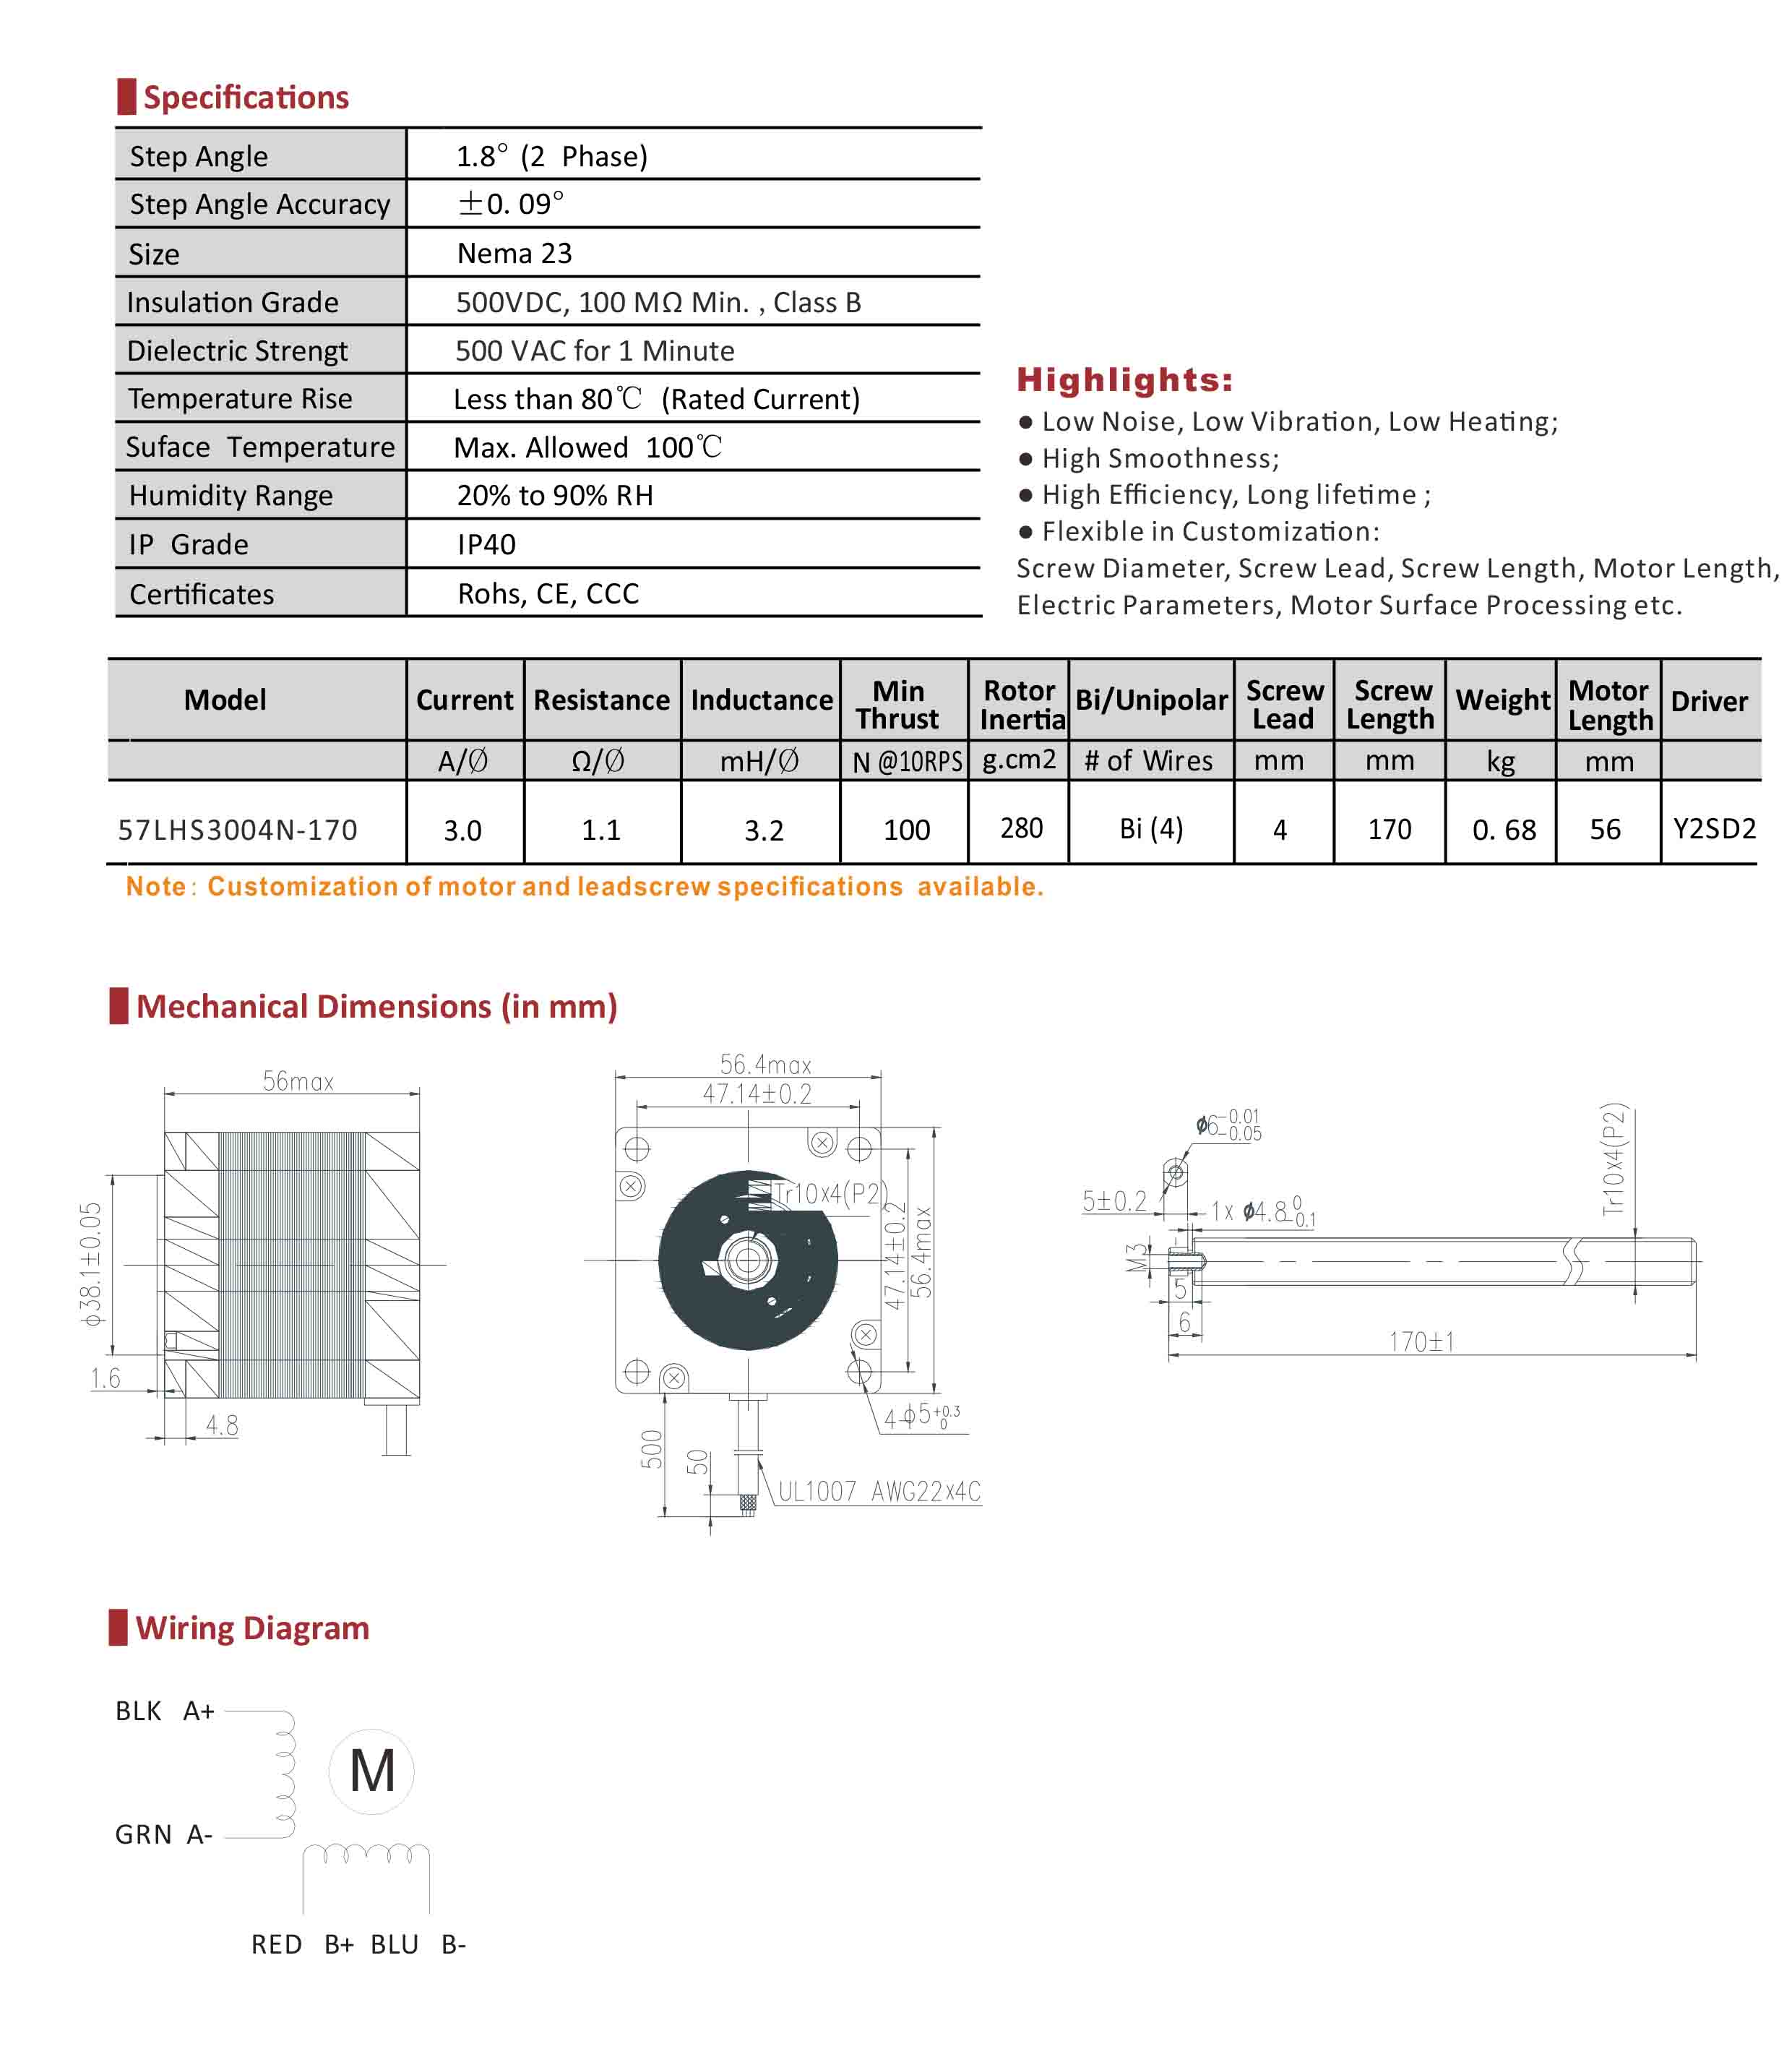 57LHS3004N-170 No-captive Linear Stepper Motor Data Sheet.jpg